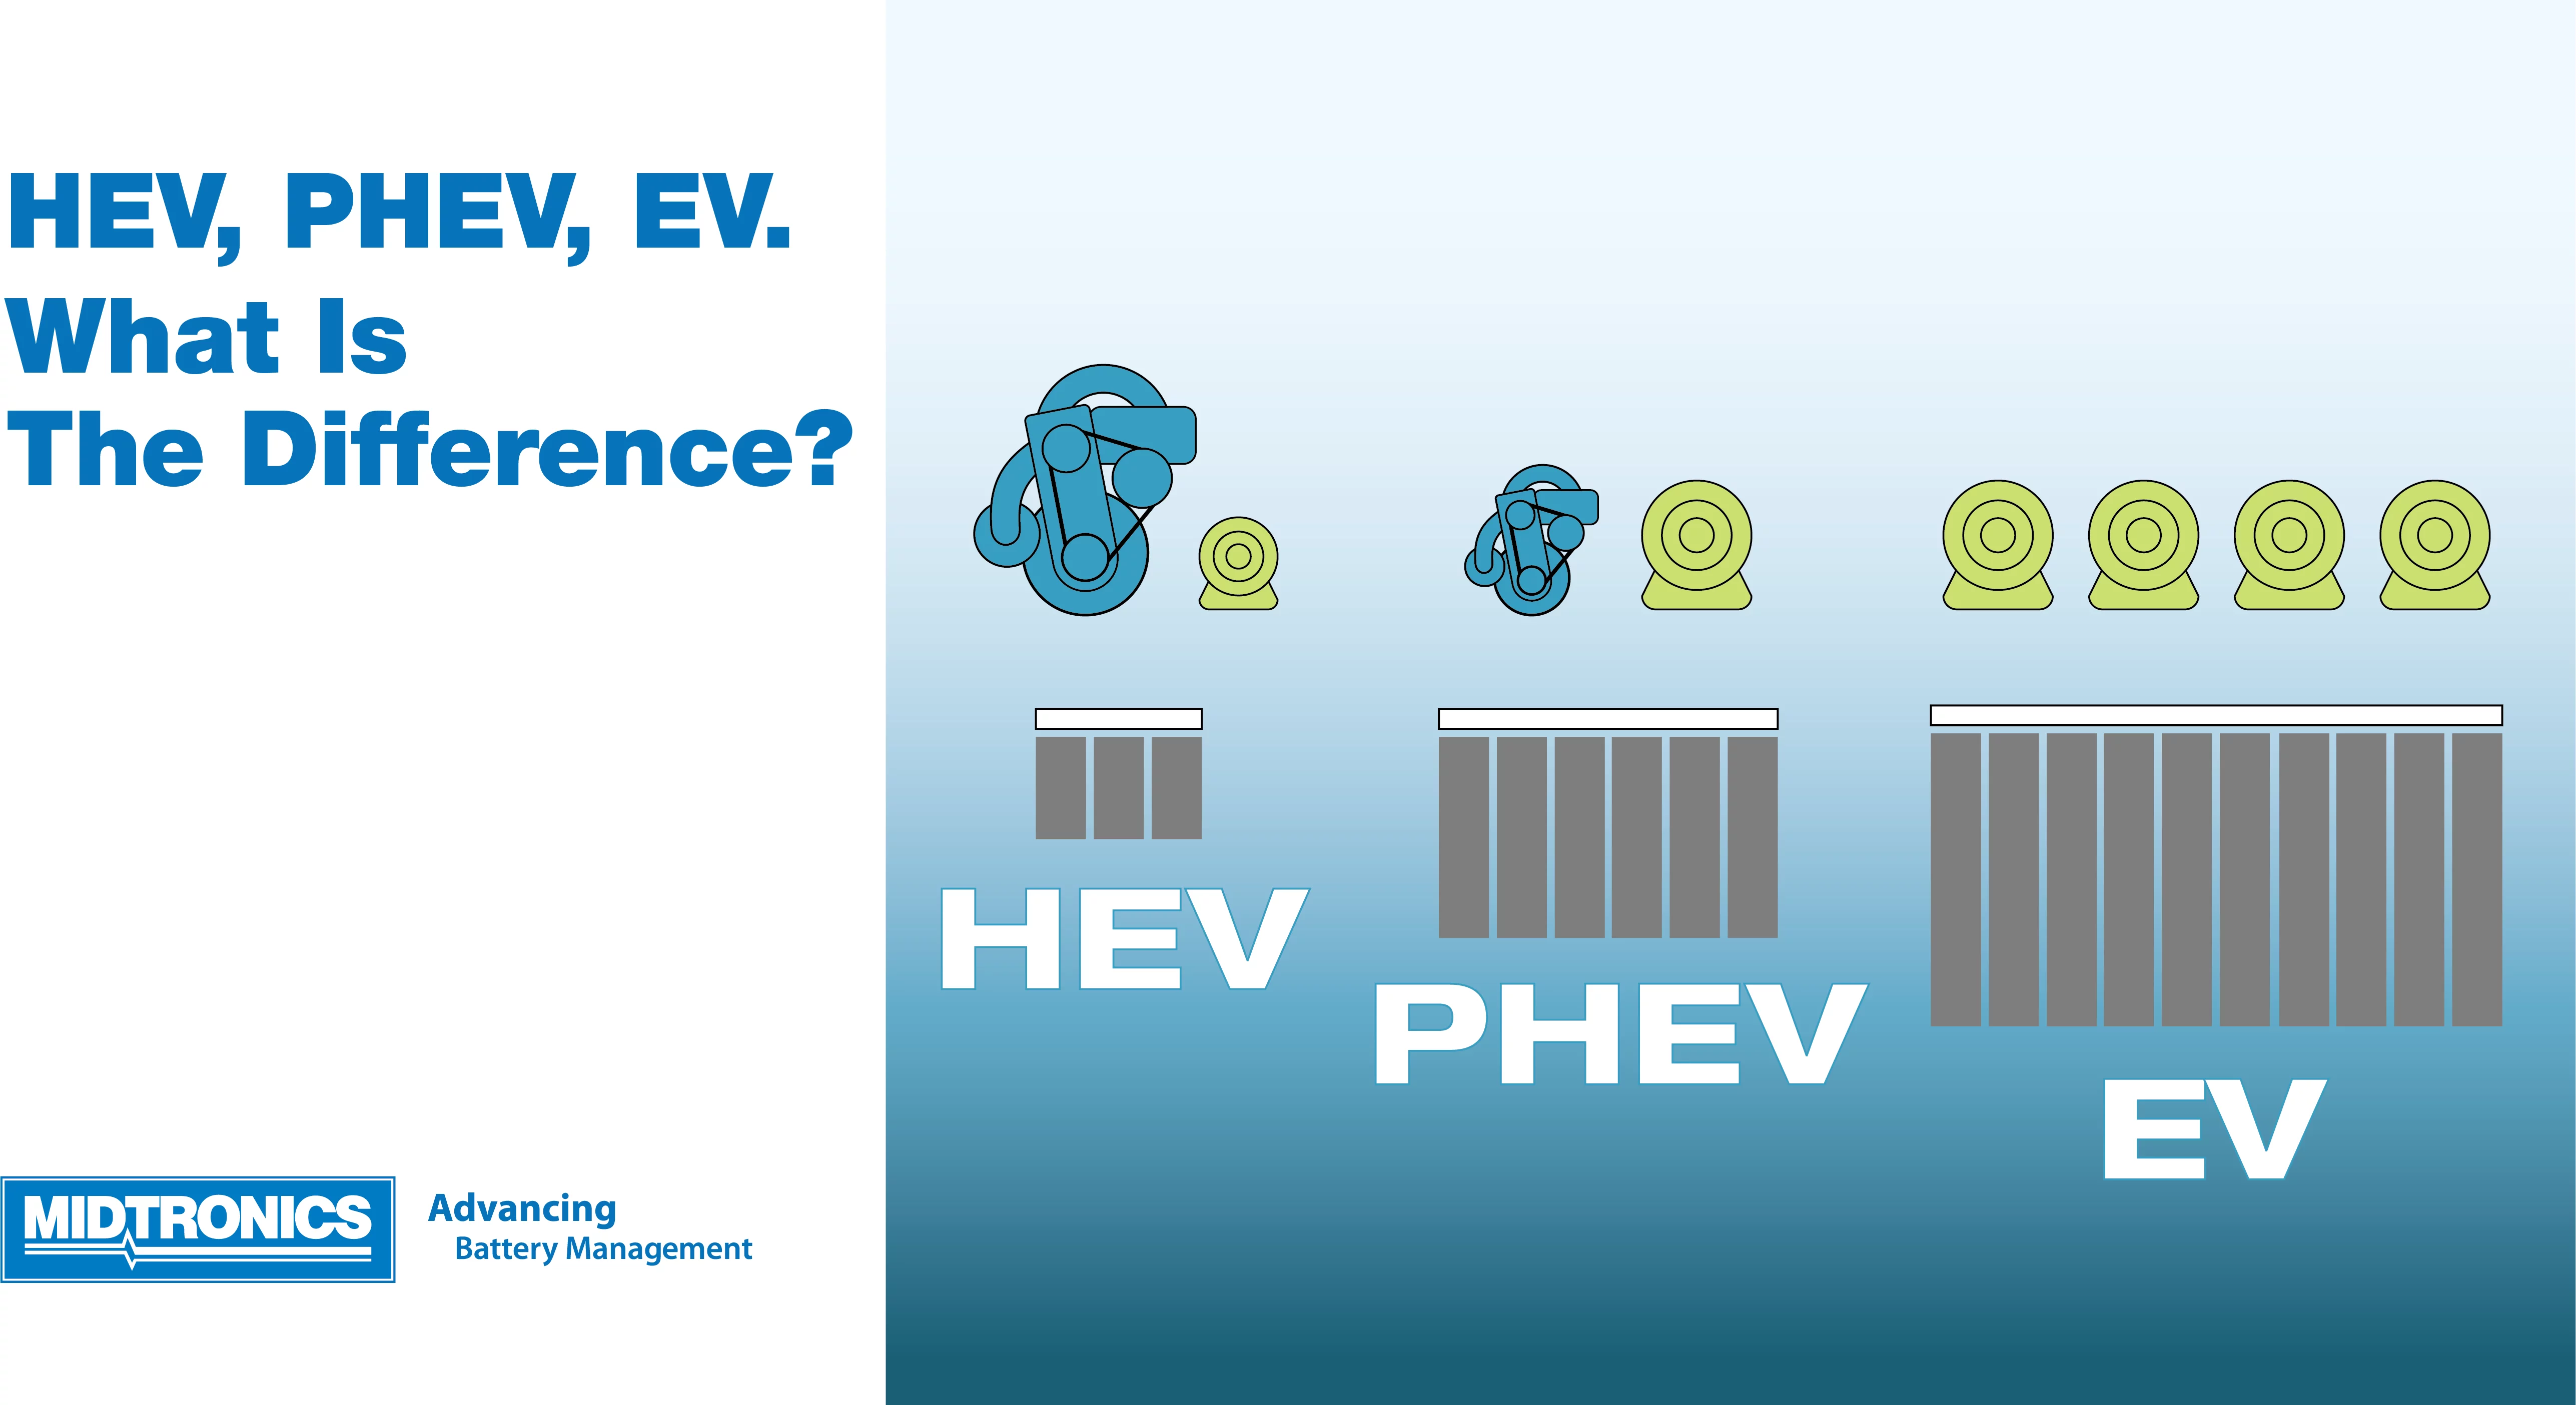 Types of batteries used in electric vehicles: EV, HEV, PHEV